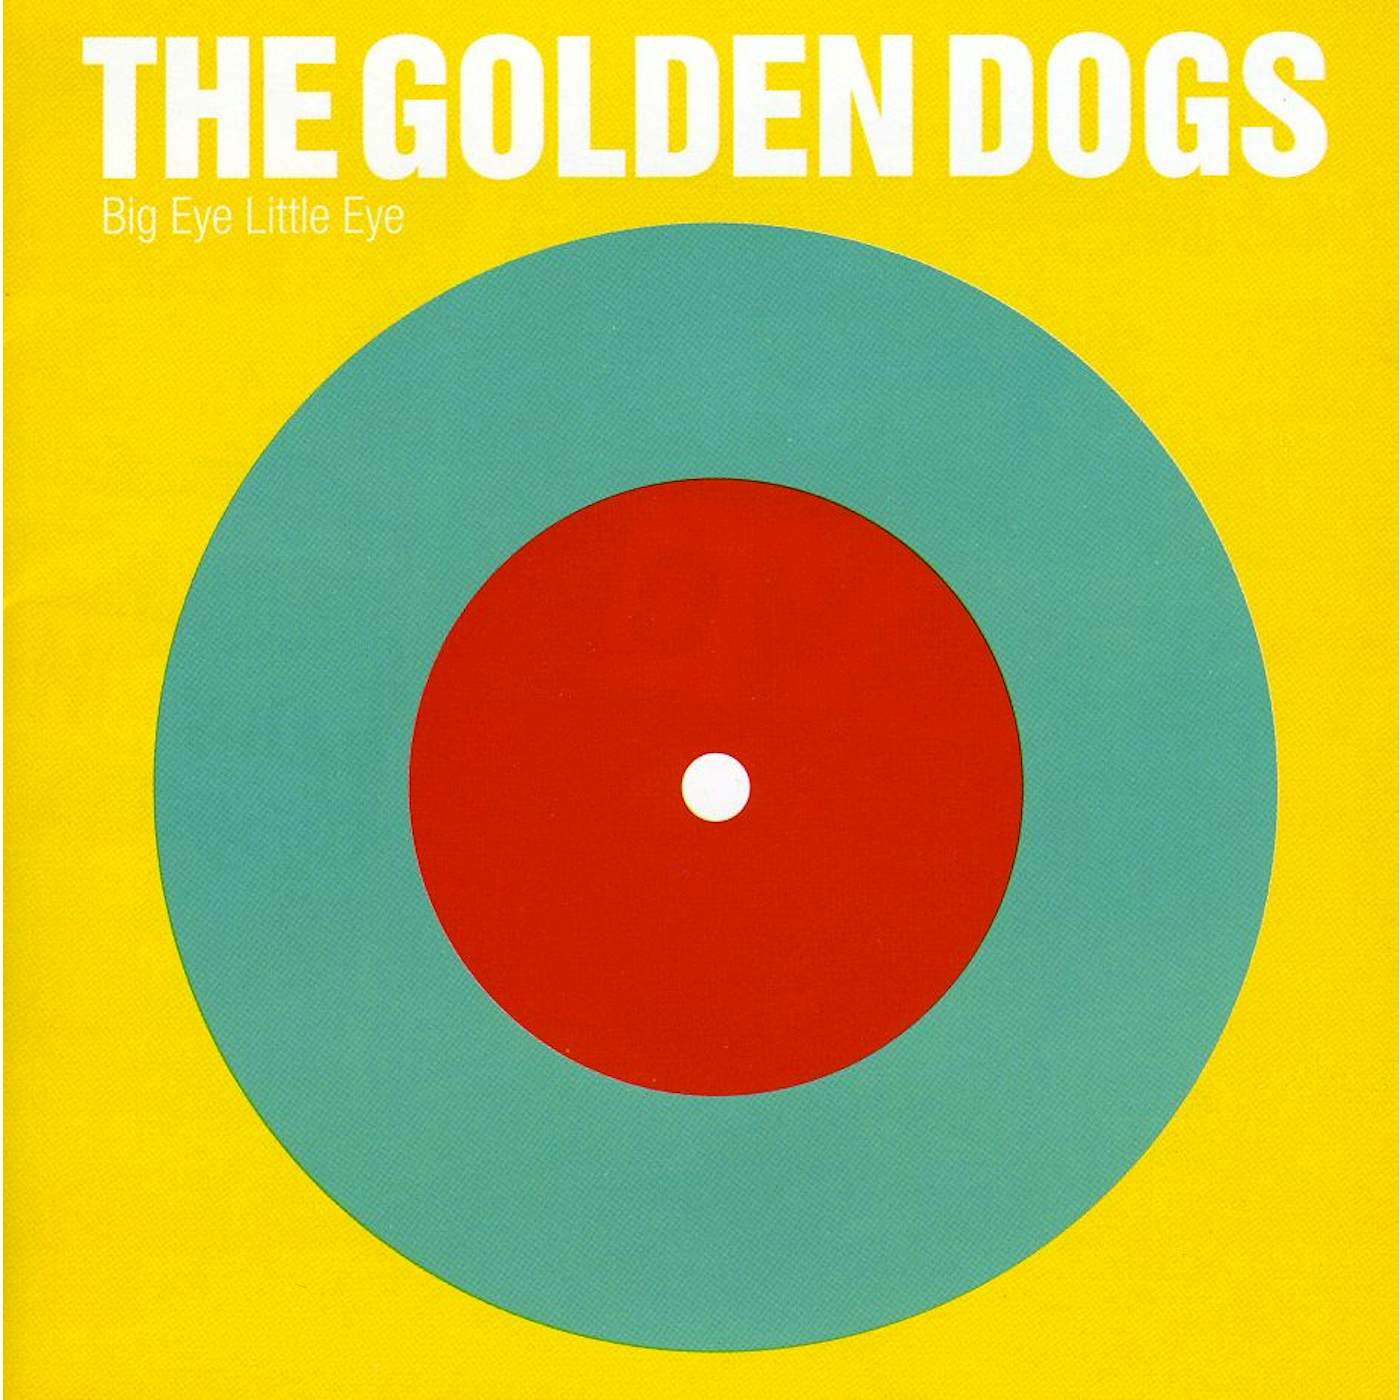 The Golden Dogs BIG EYE LITTLE EYE CD